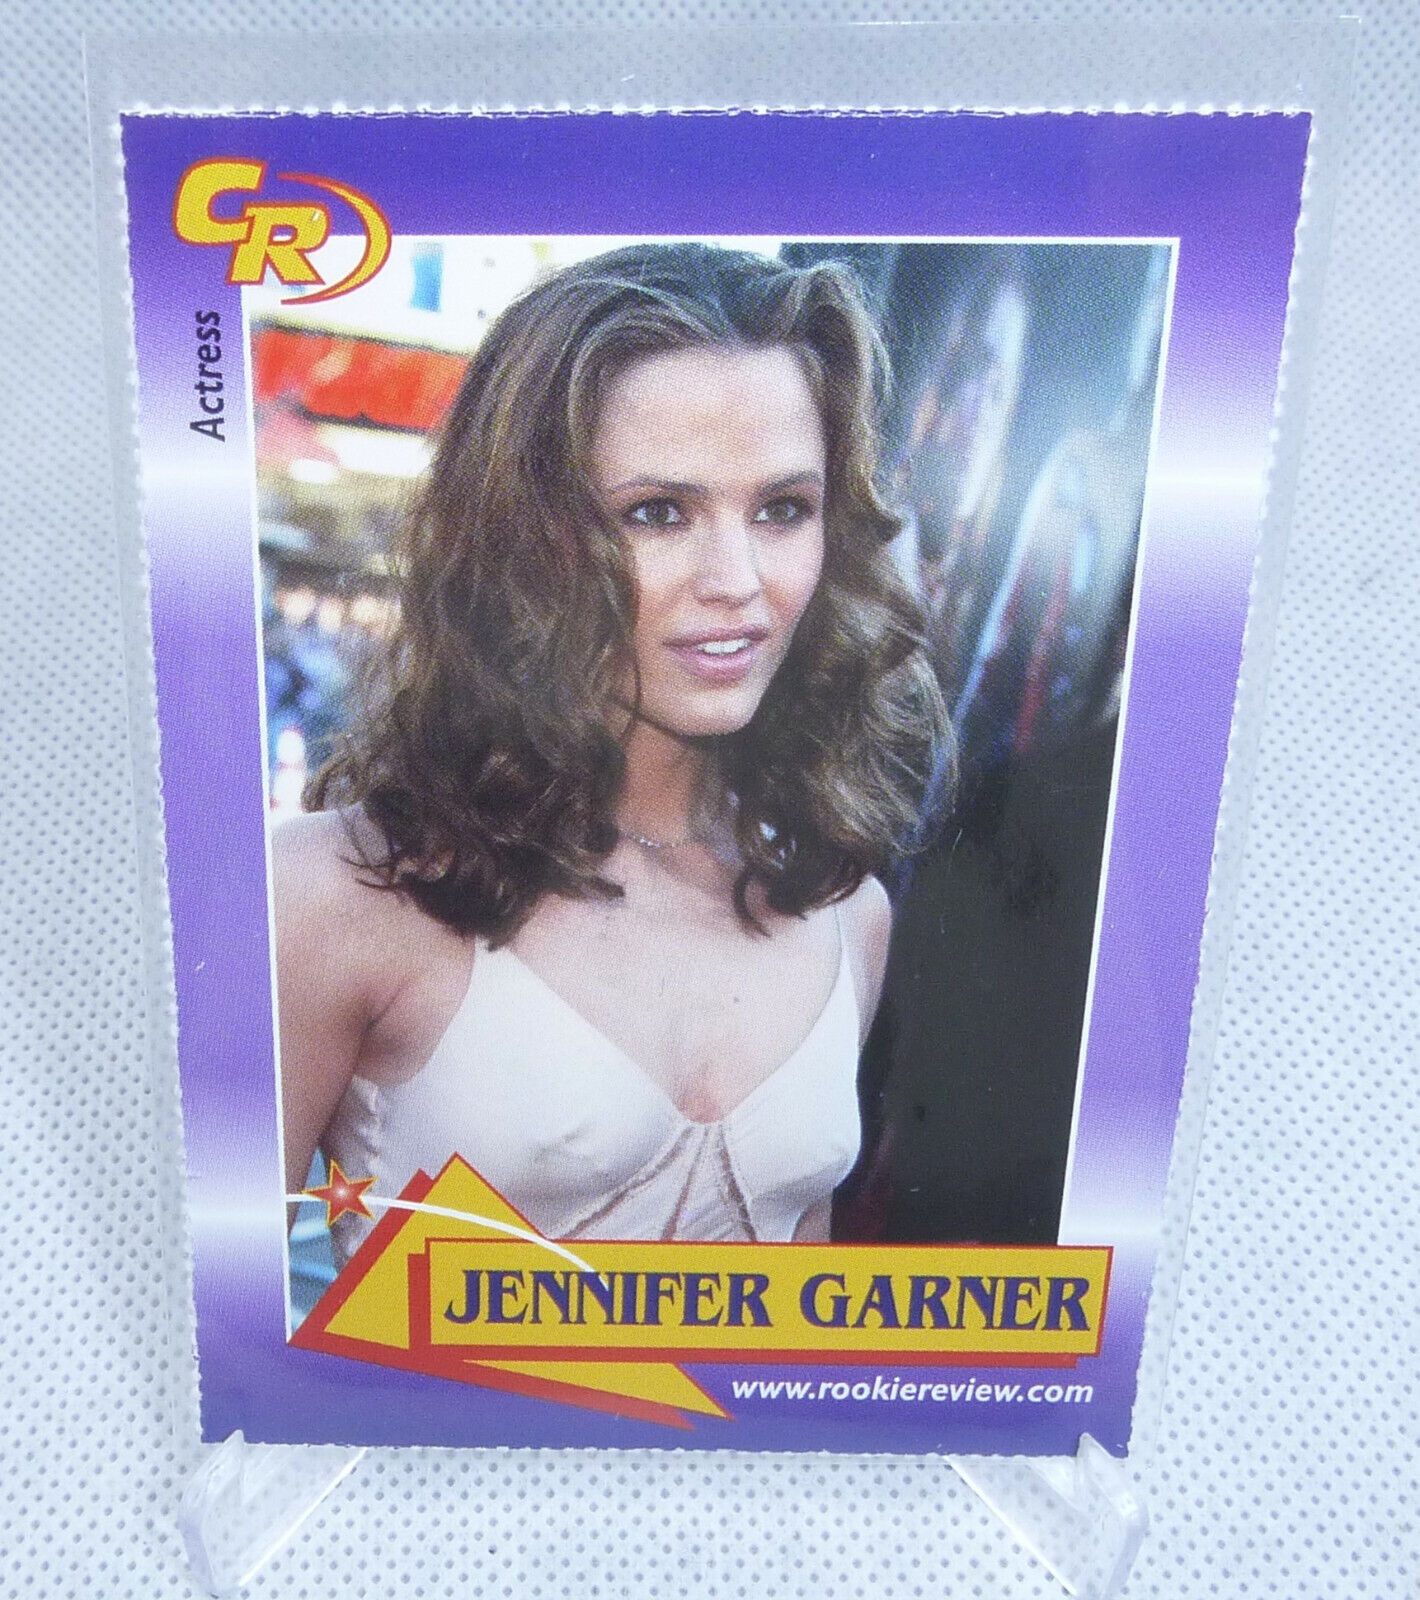 2003 Celebrity Review Rookie Review Jennifer Garner Actress Card #11